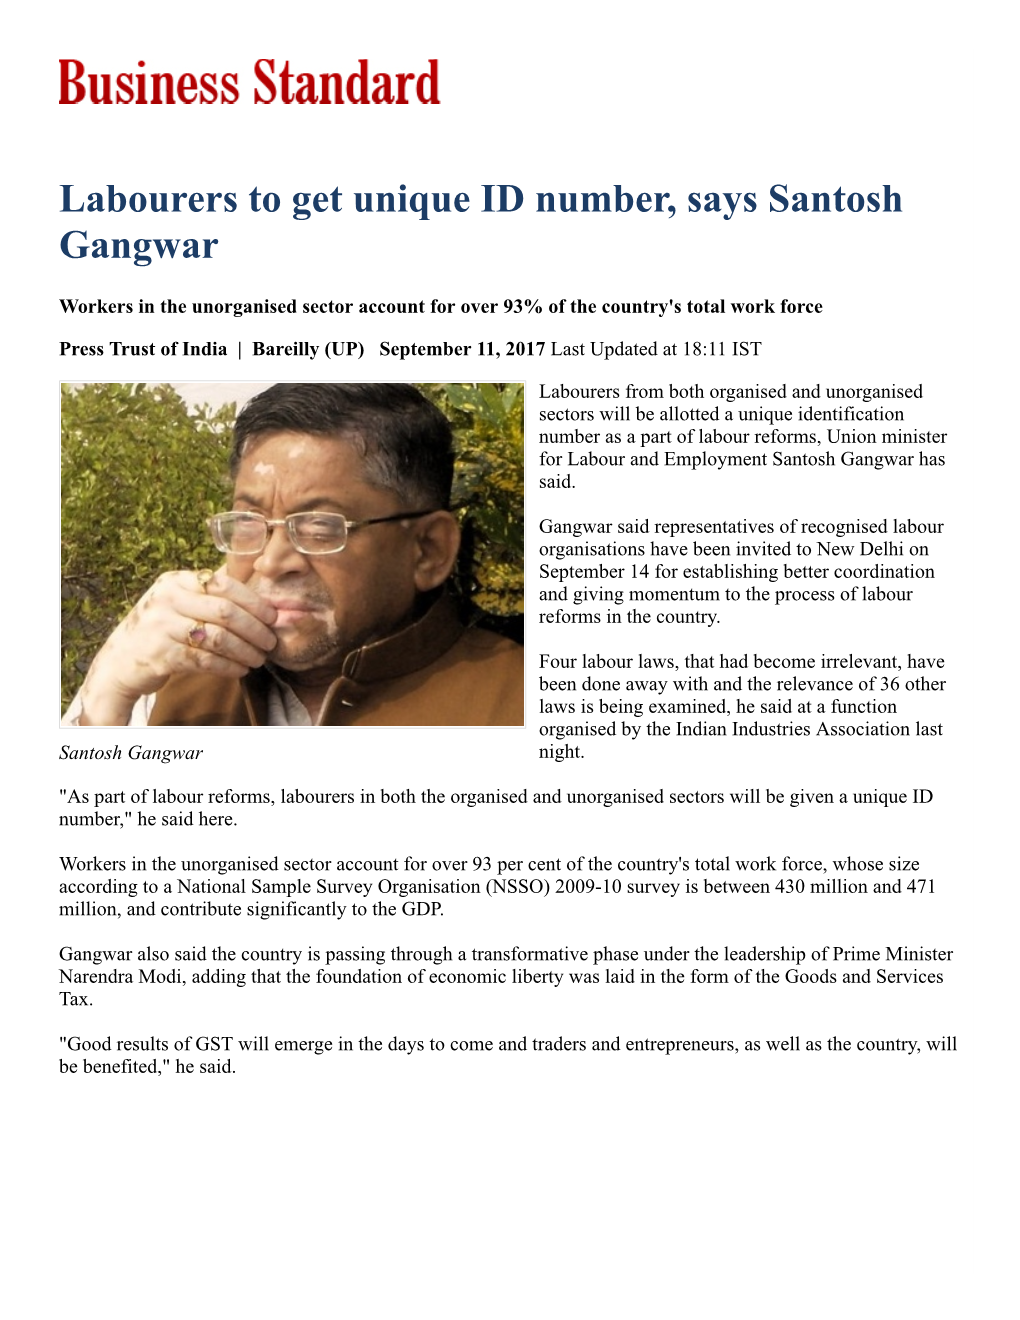 Labourers to Get Unique ID Number, Says Santosh Gangwar